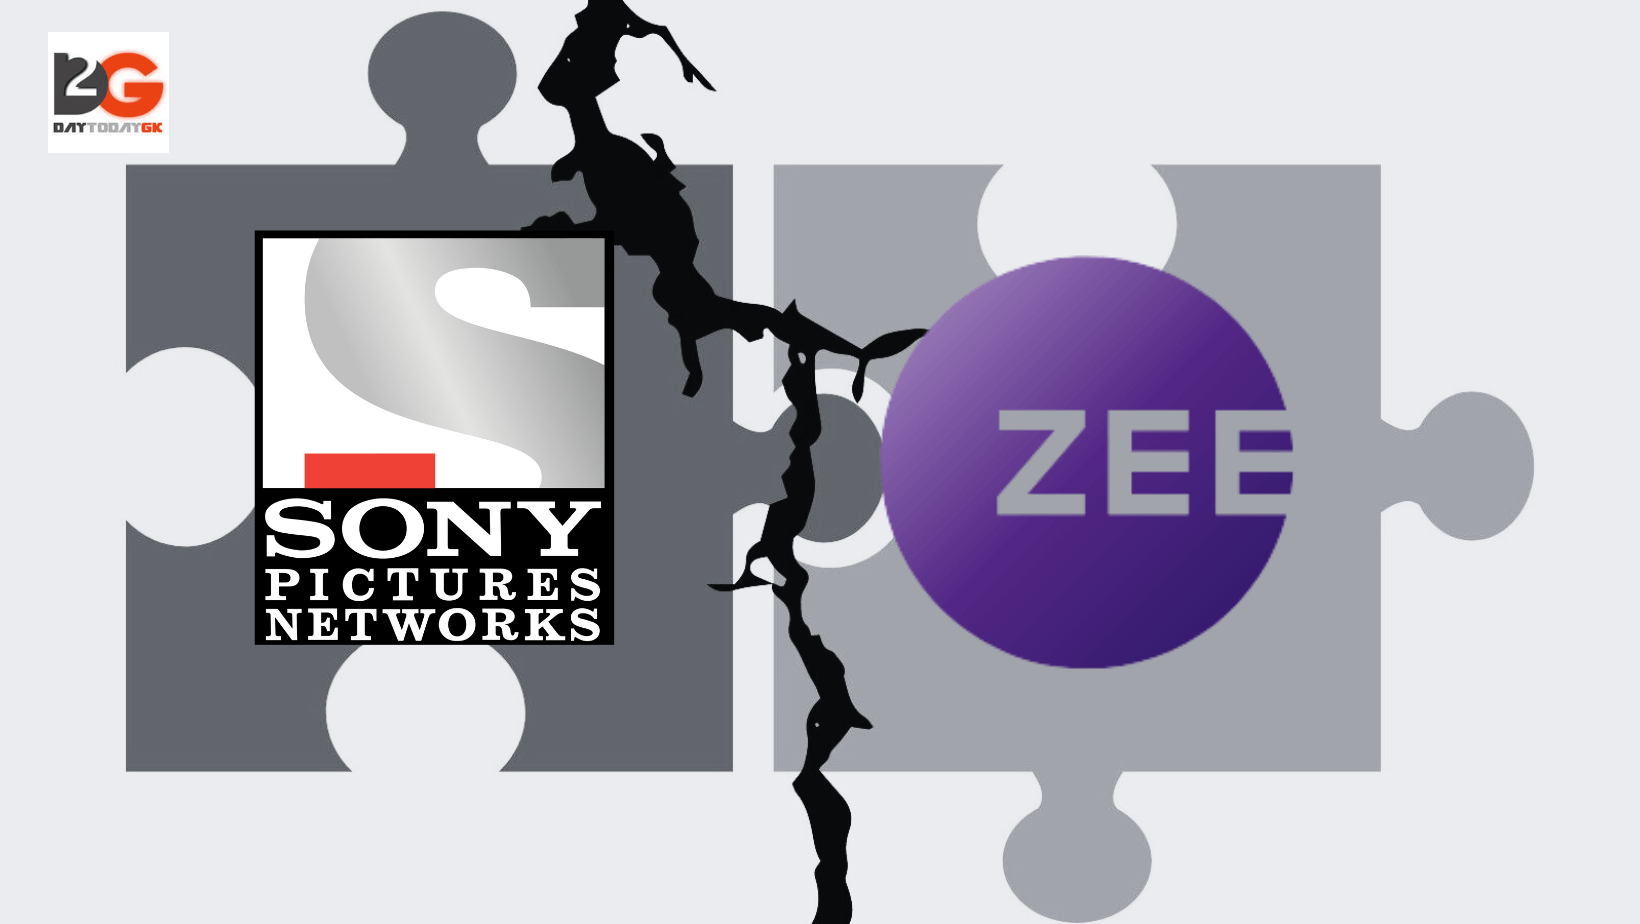 Sony Terminates $10 Billion Merger Deal with Zee Entertainment